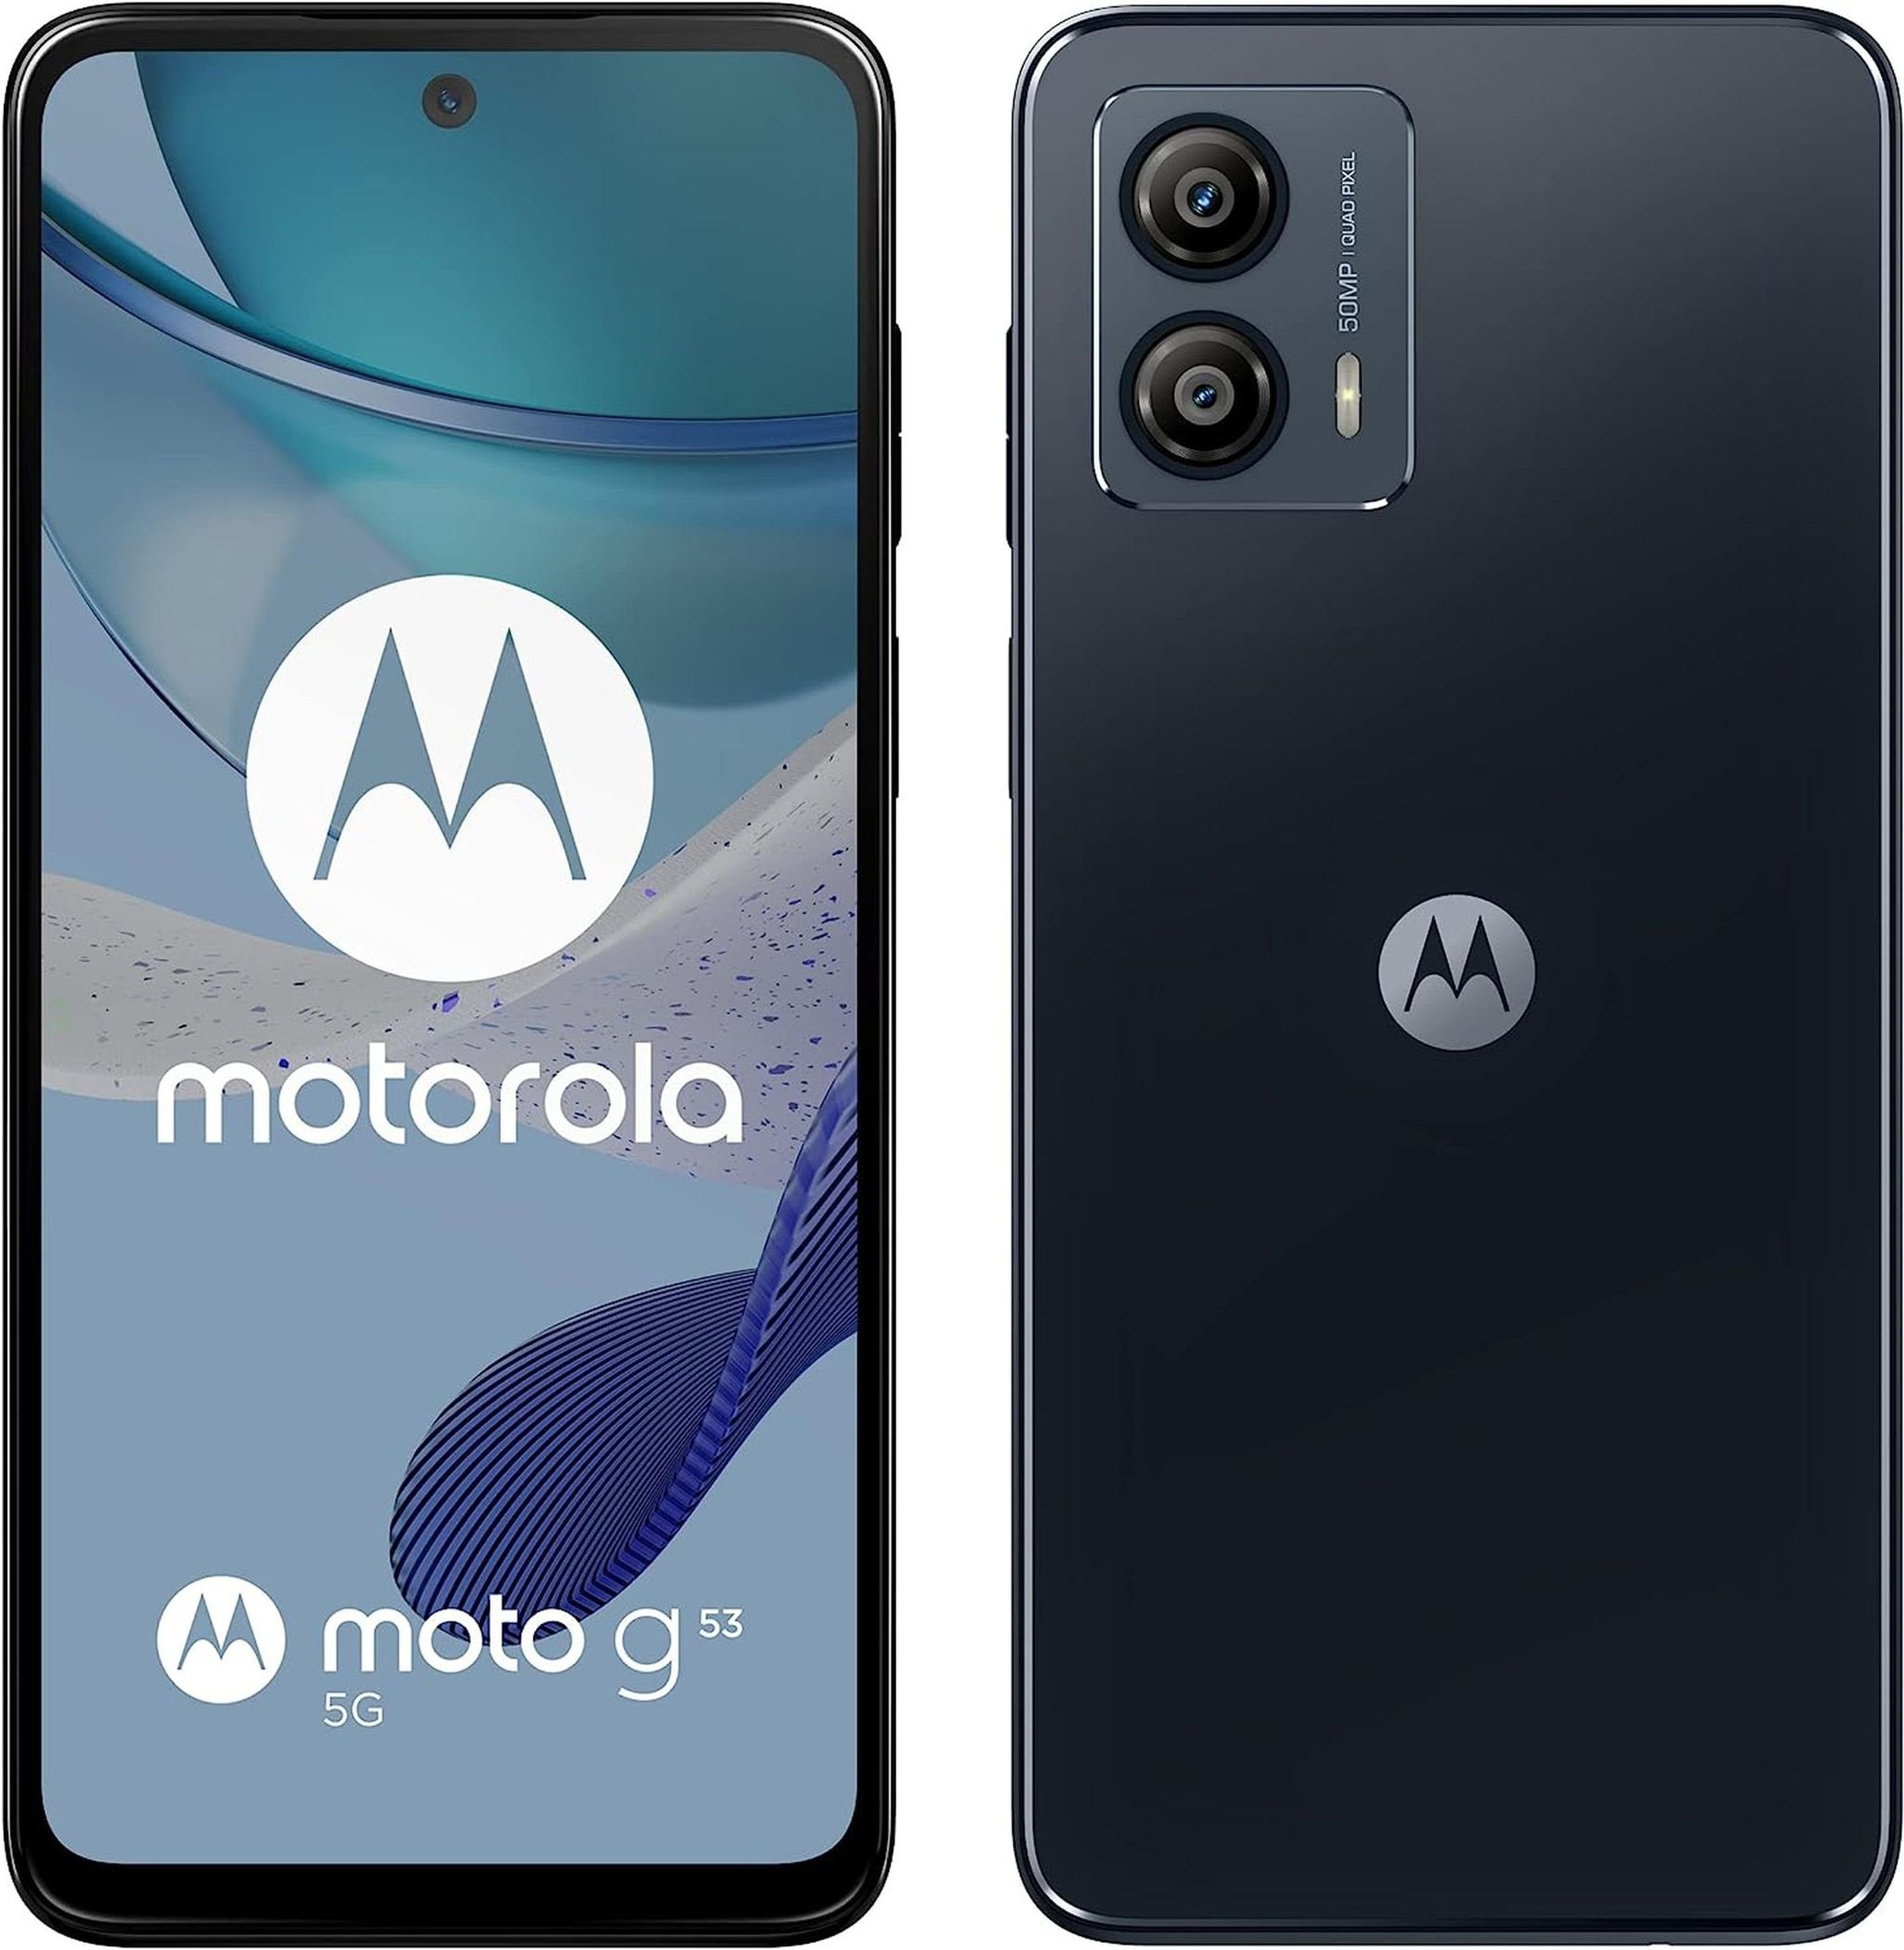 Motorola G53 Smartphone